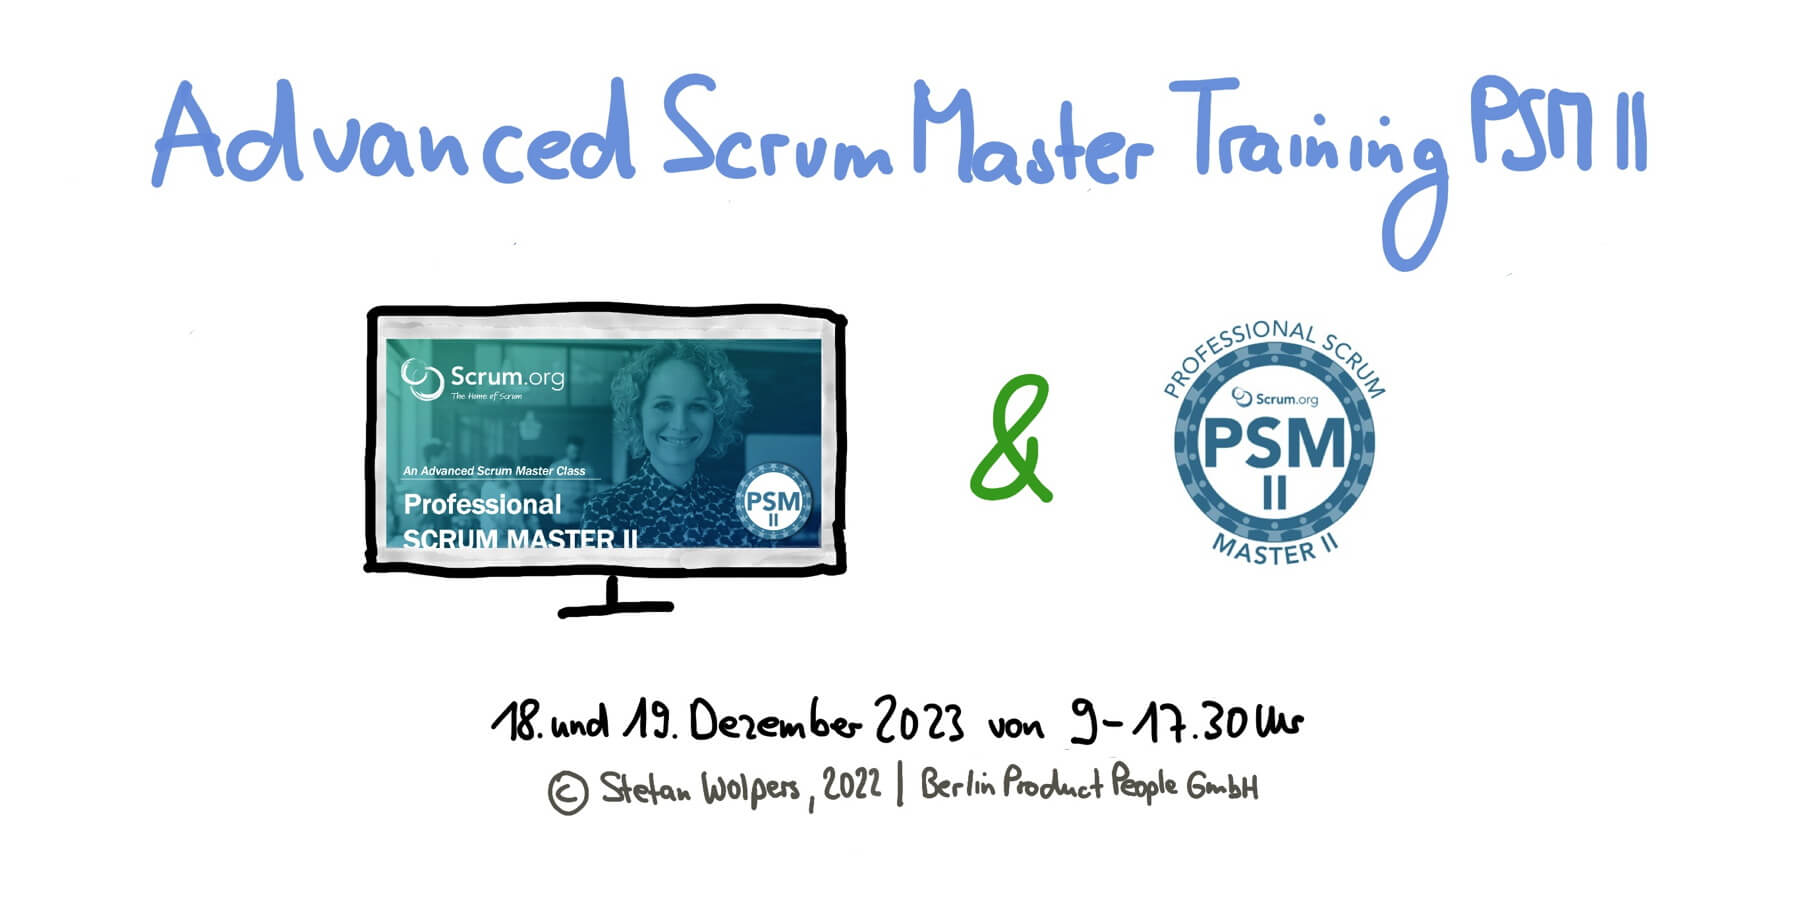 Fortgeschrittenen Professional Scrum Master Training mit PSM II Zertifikat – 18. und 19. Dezember 2023 — Berlin-Product-People.com